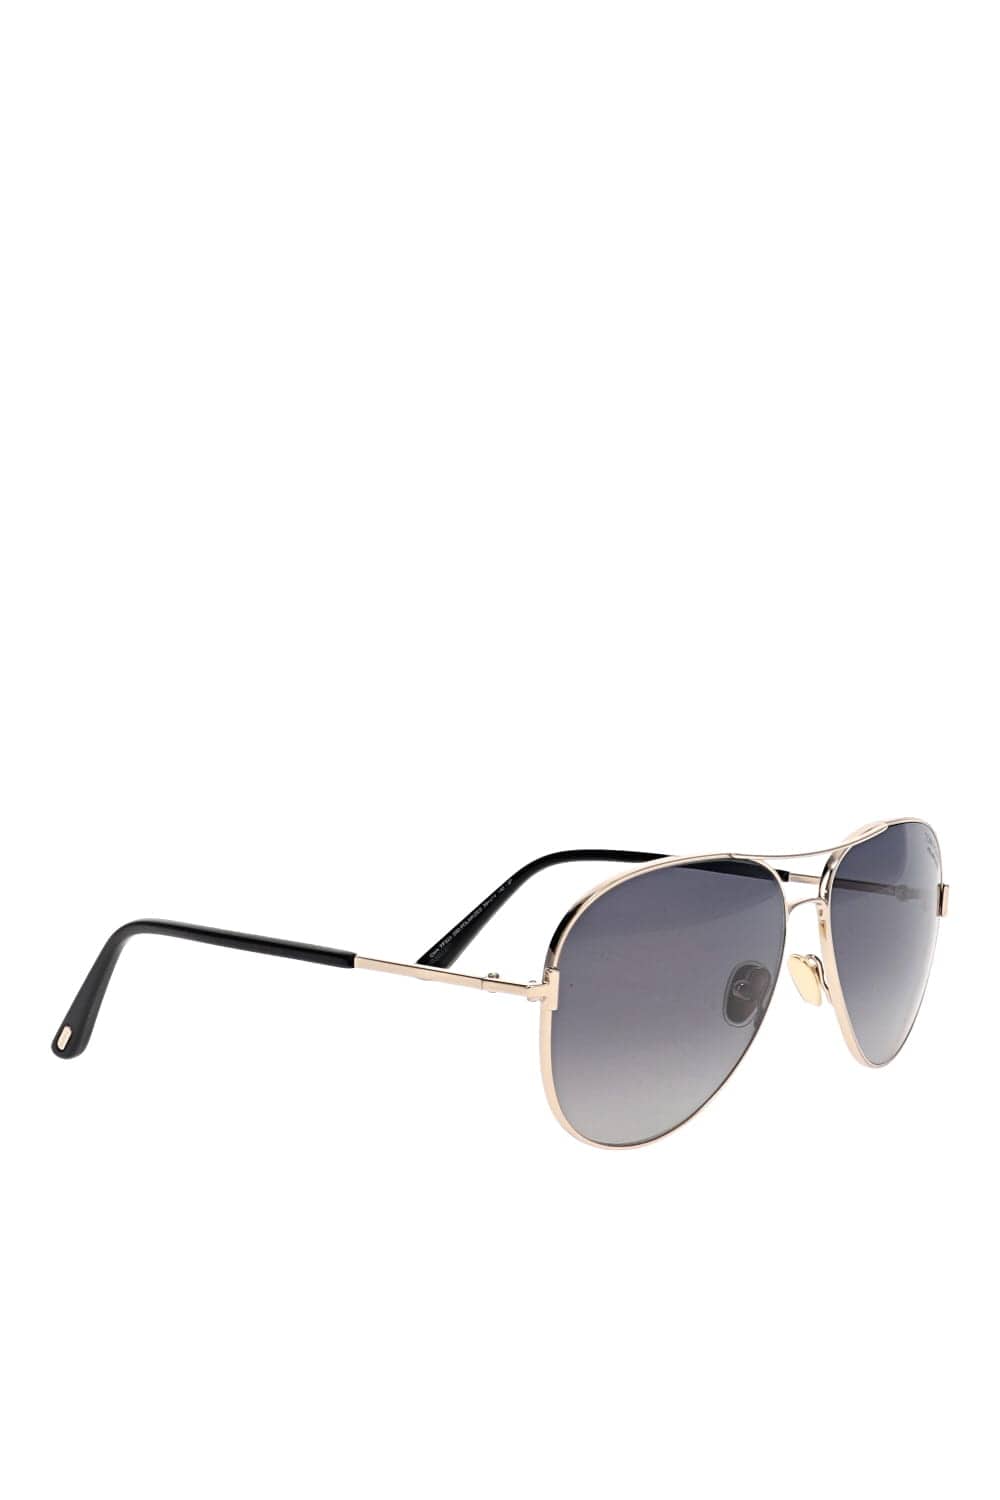 Tom Ford Eyewear Clark Polarized Black Smoke Aviator Sunglasses